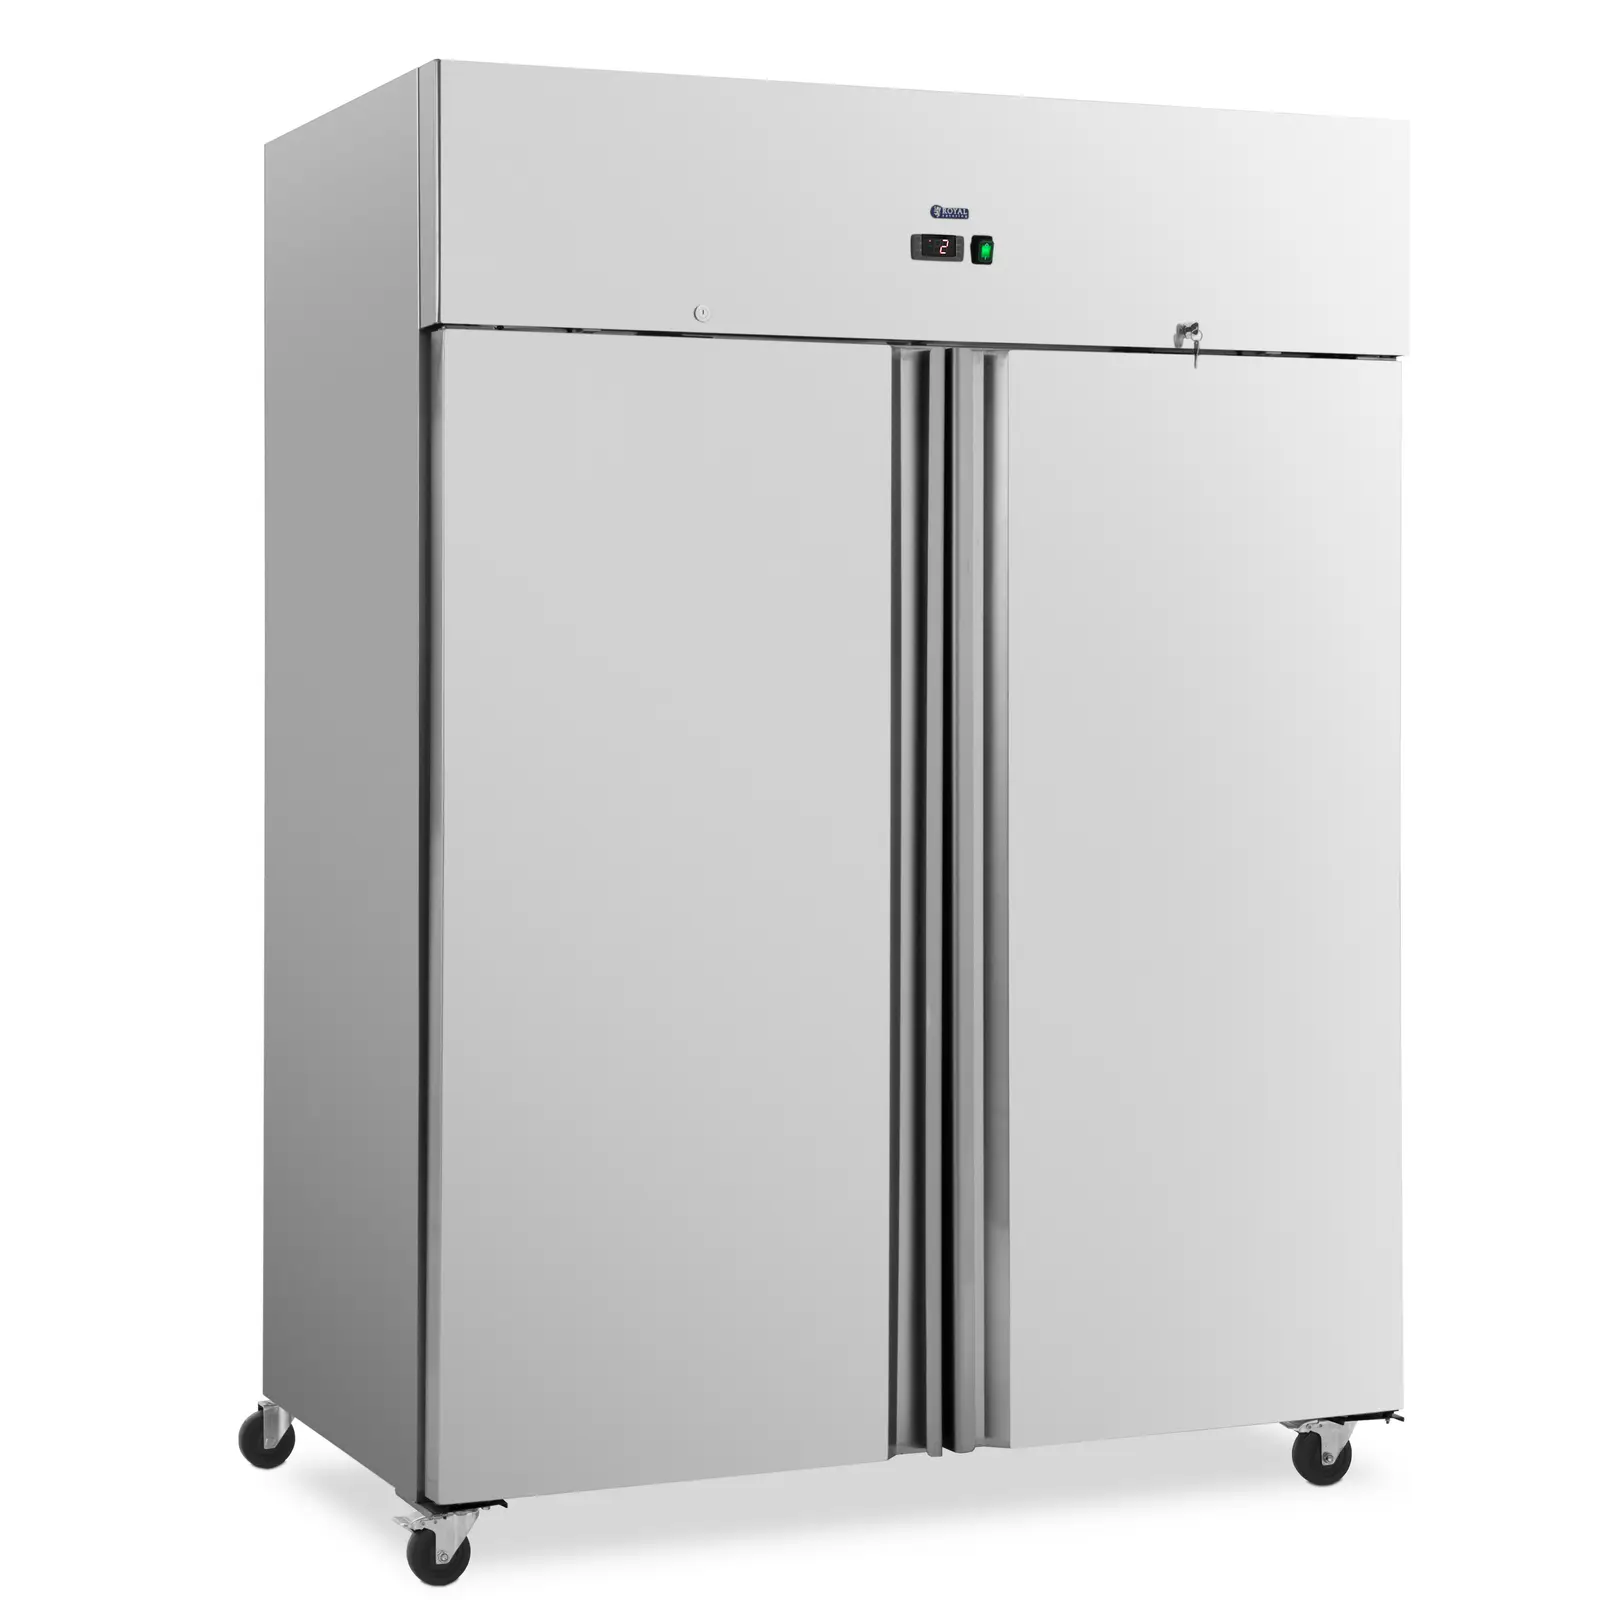 Gastro-Kühlschrank - 1001 l - Edelstahl - 2 Türen - 4 Rollen - abschließbar - Royal Catering